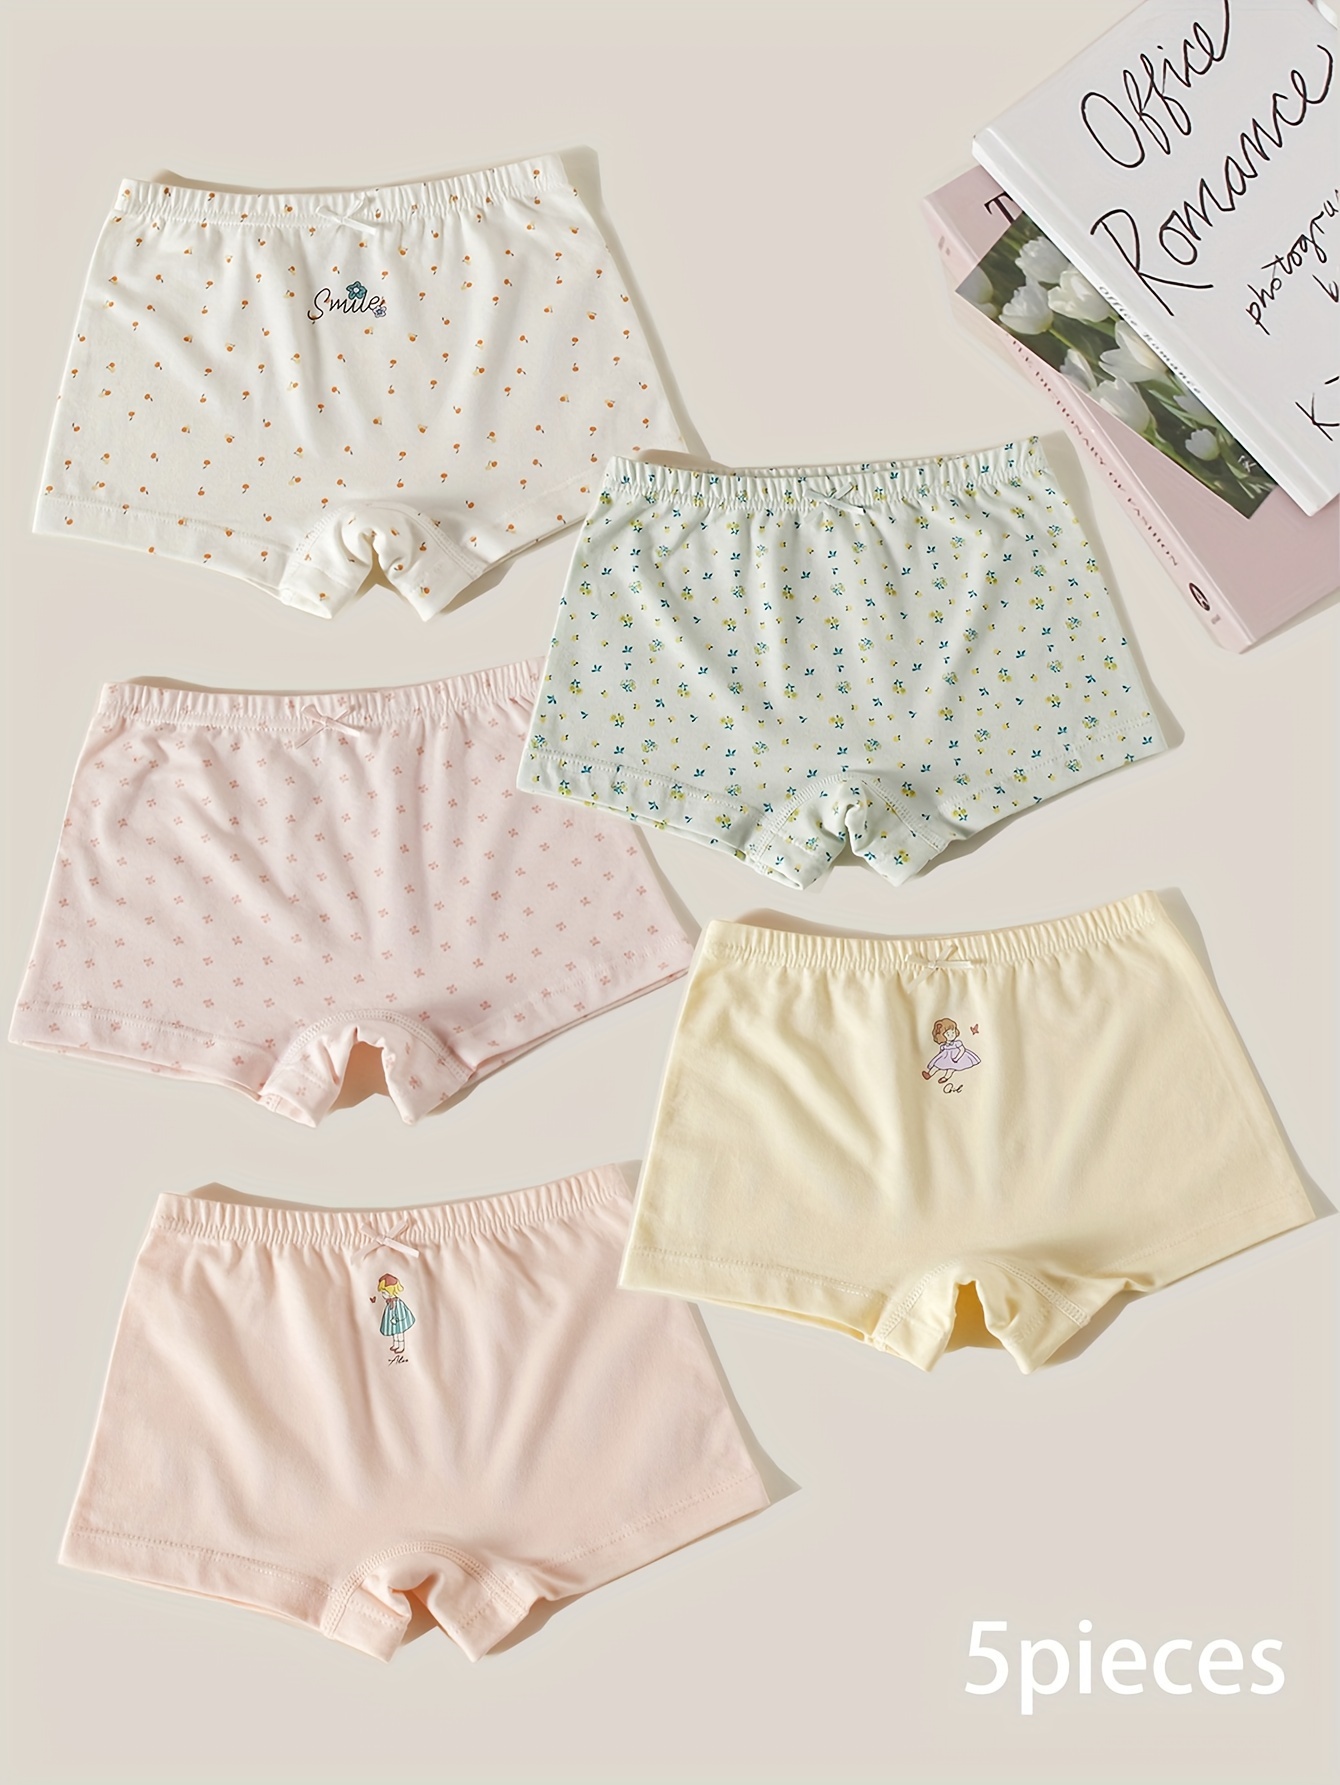 Teen Girls' 5pcs Underwear Set